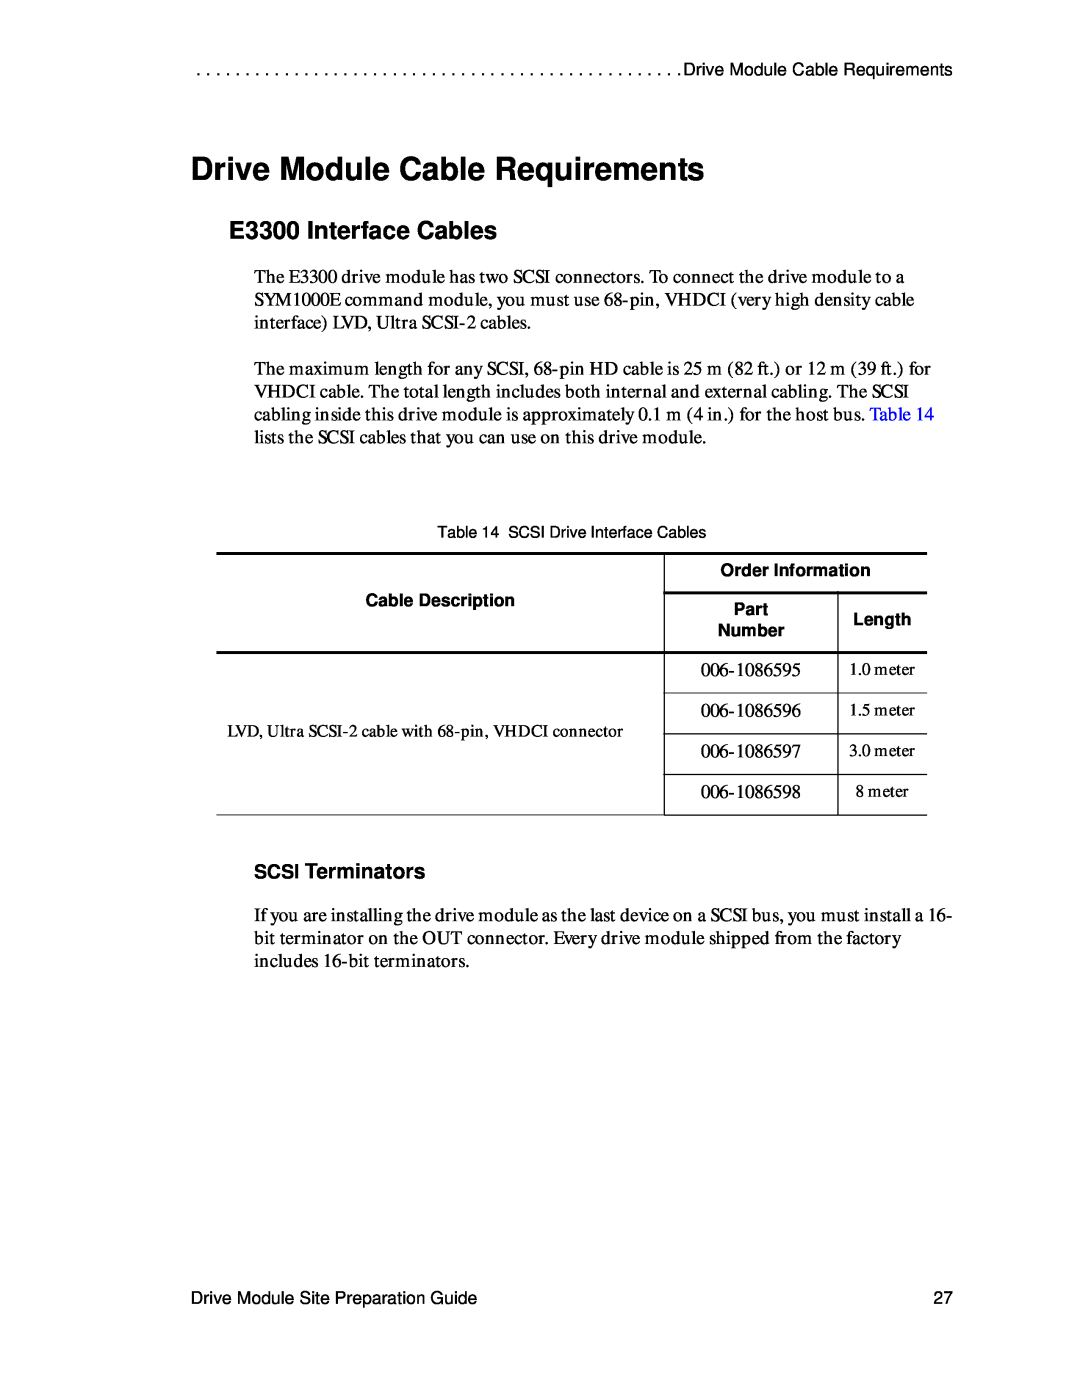 LSI DF1153-E1 manual Drive Module Cable Requirements, E3300 Interface Cables, SCSI Terminators 